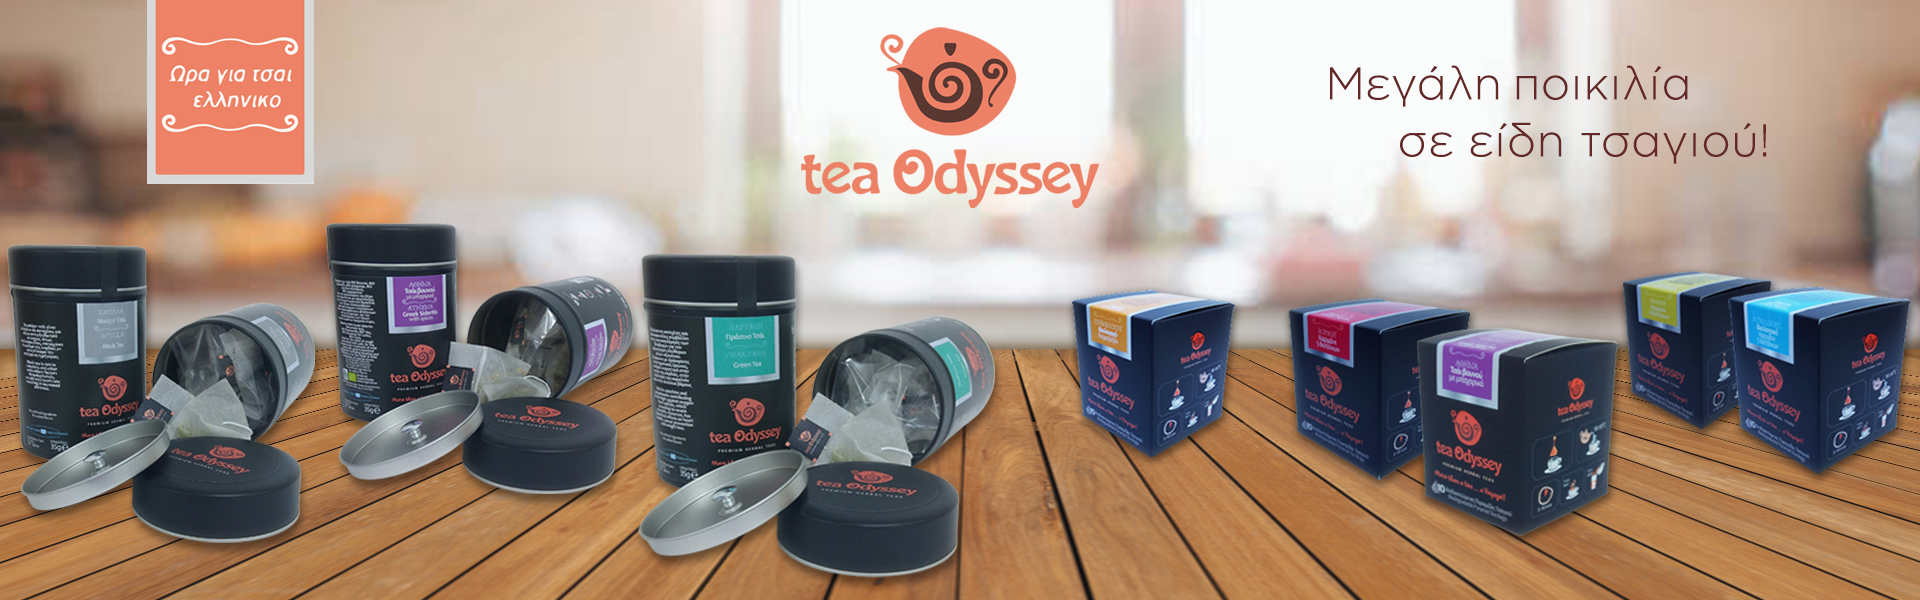 Tea Odyssey